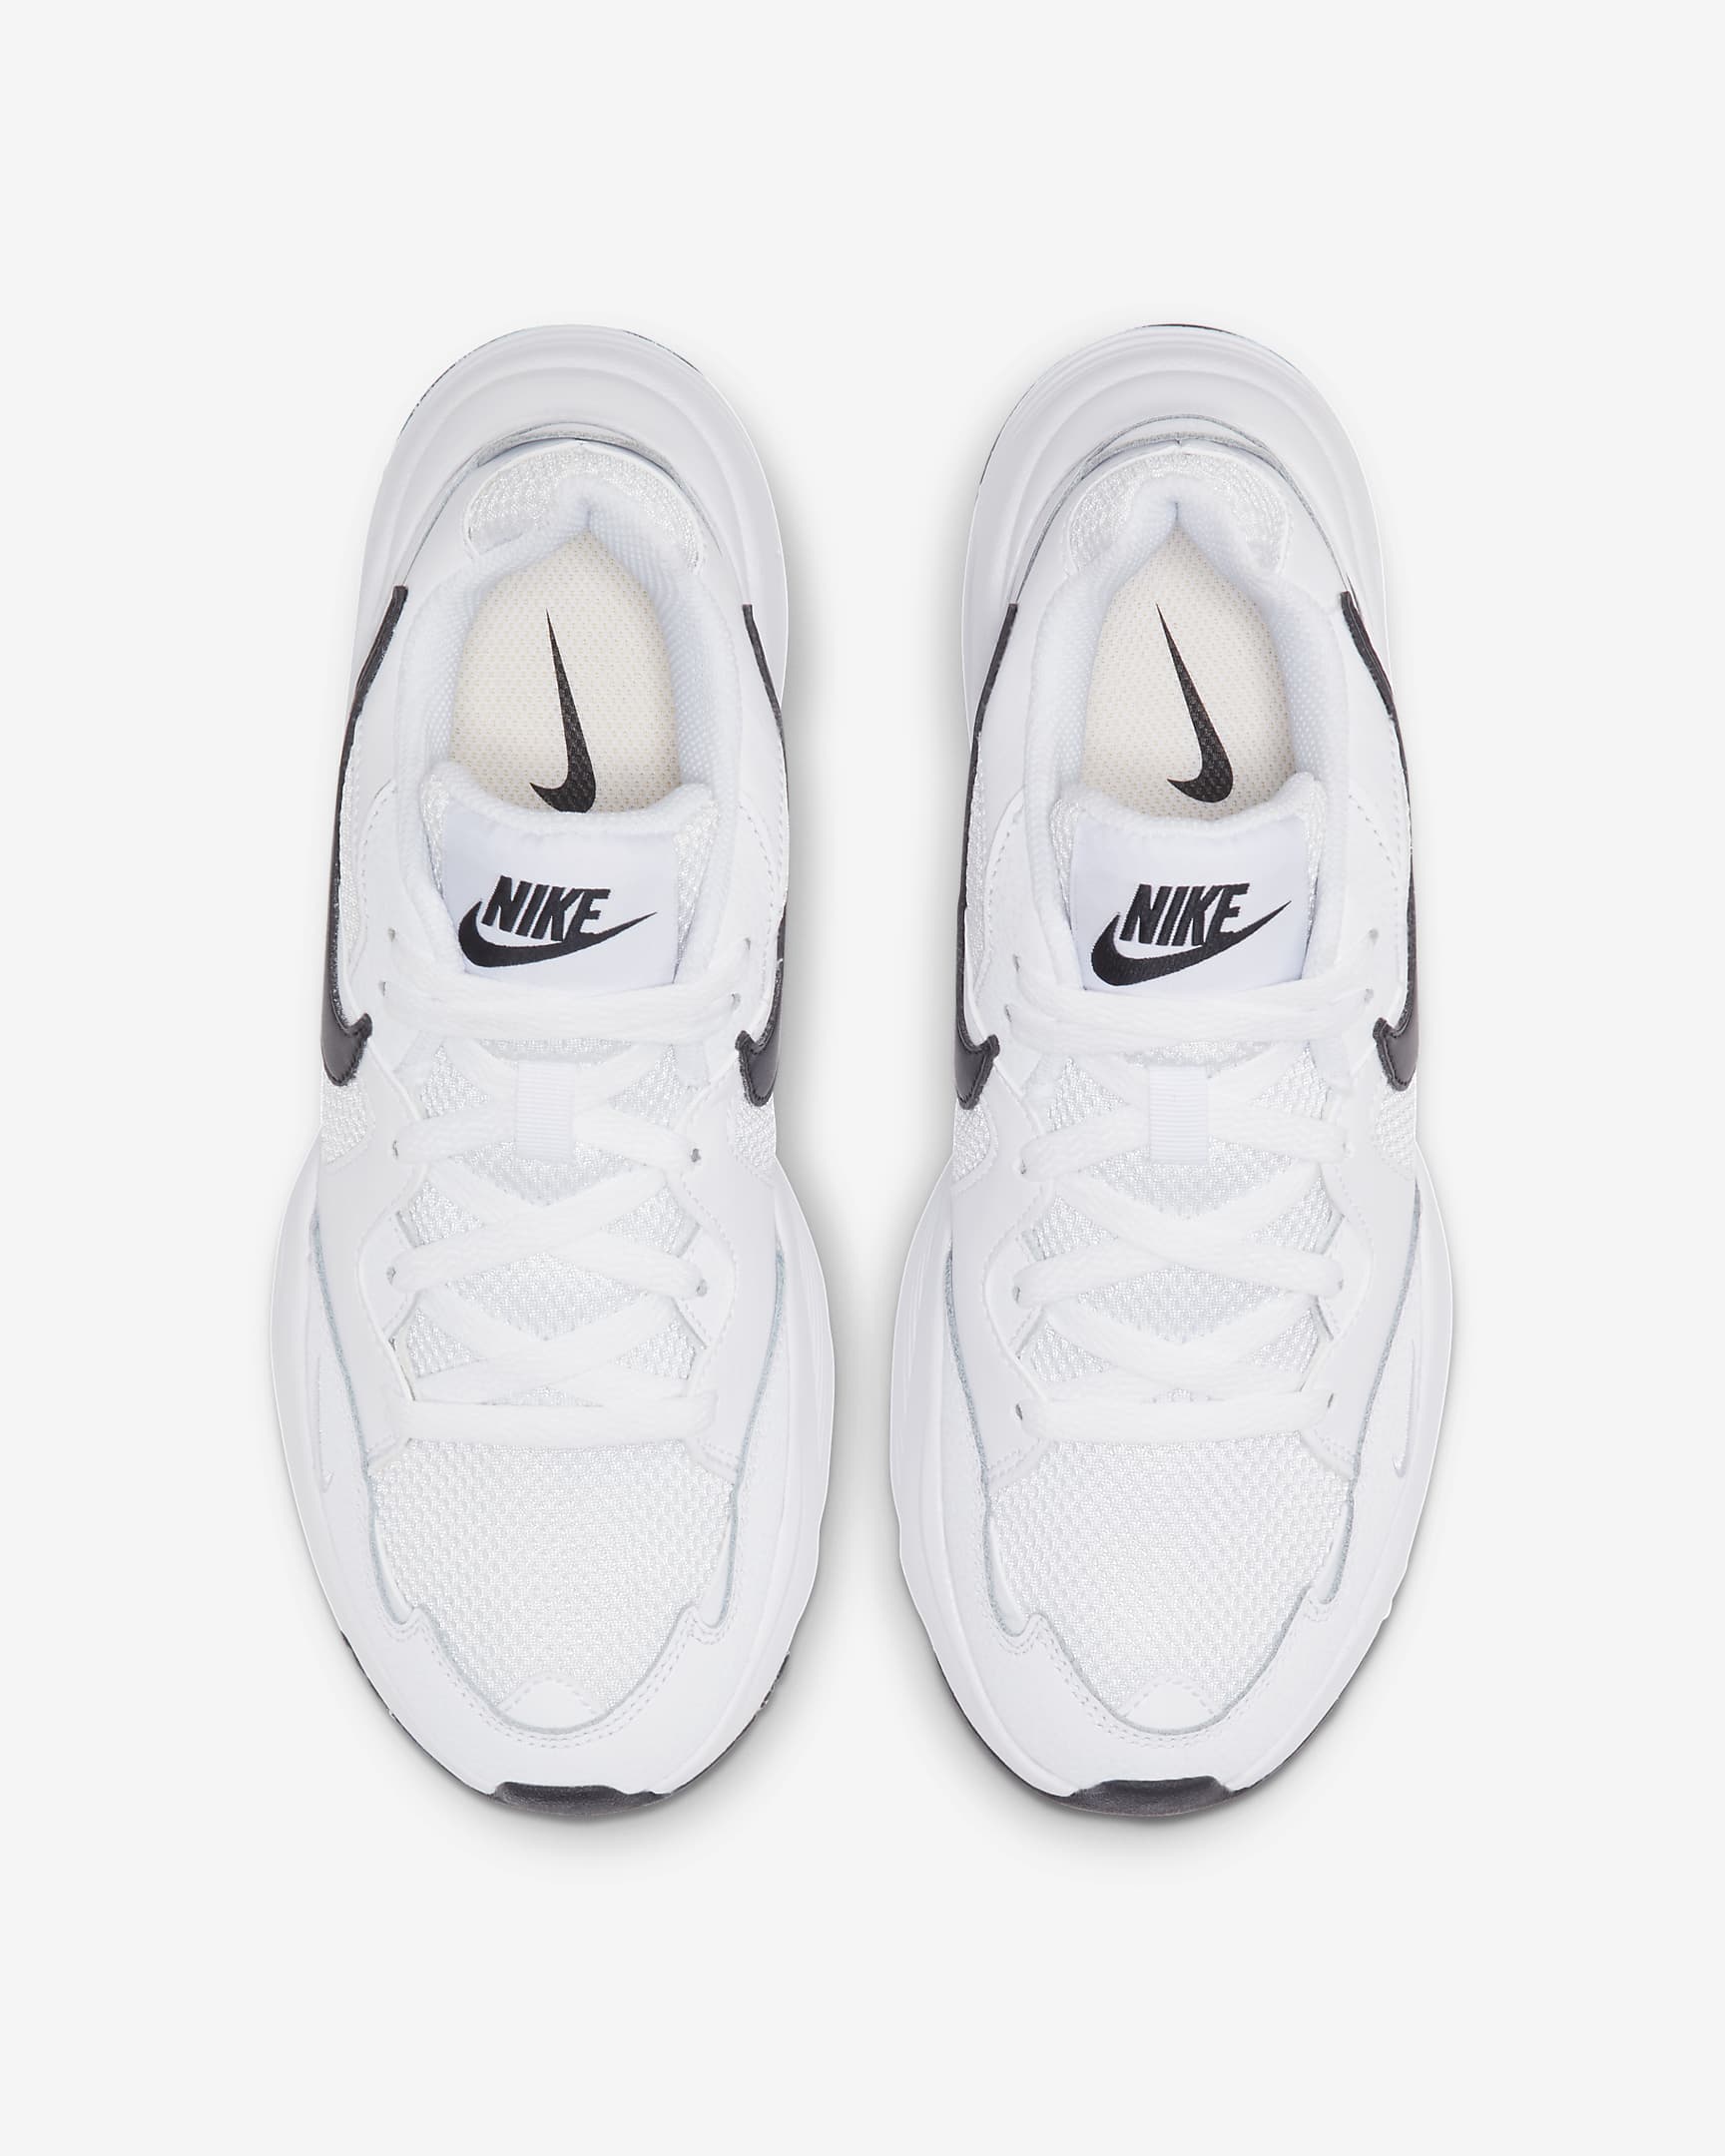 Nike Air Max Fusion Women's Shoes - White/Black